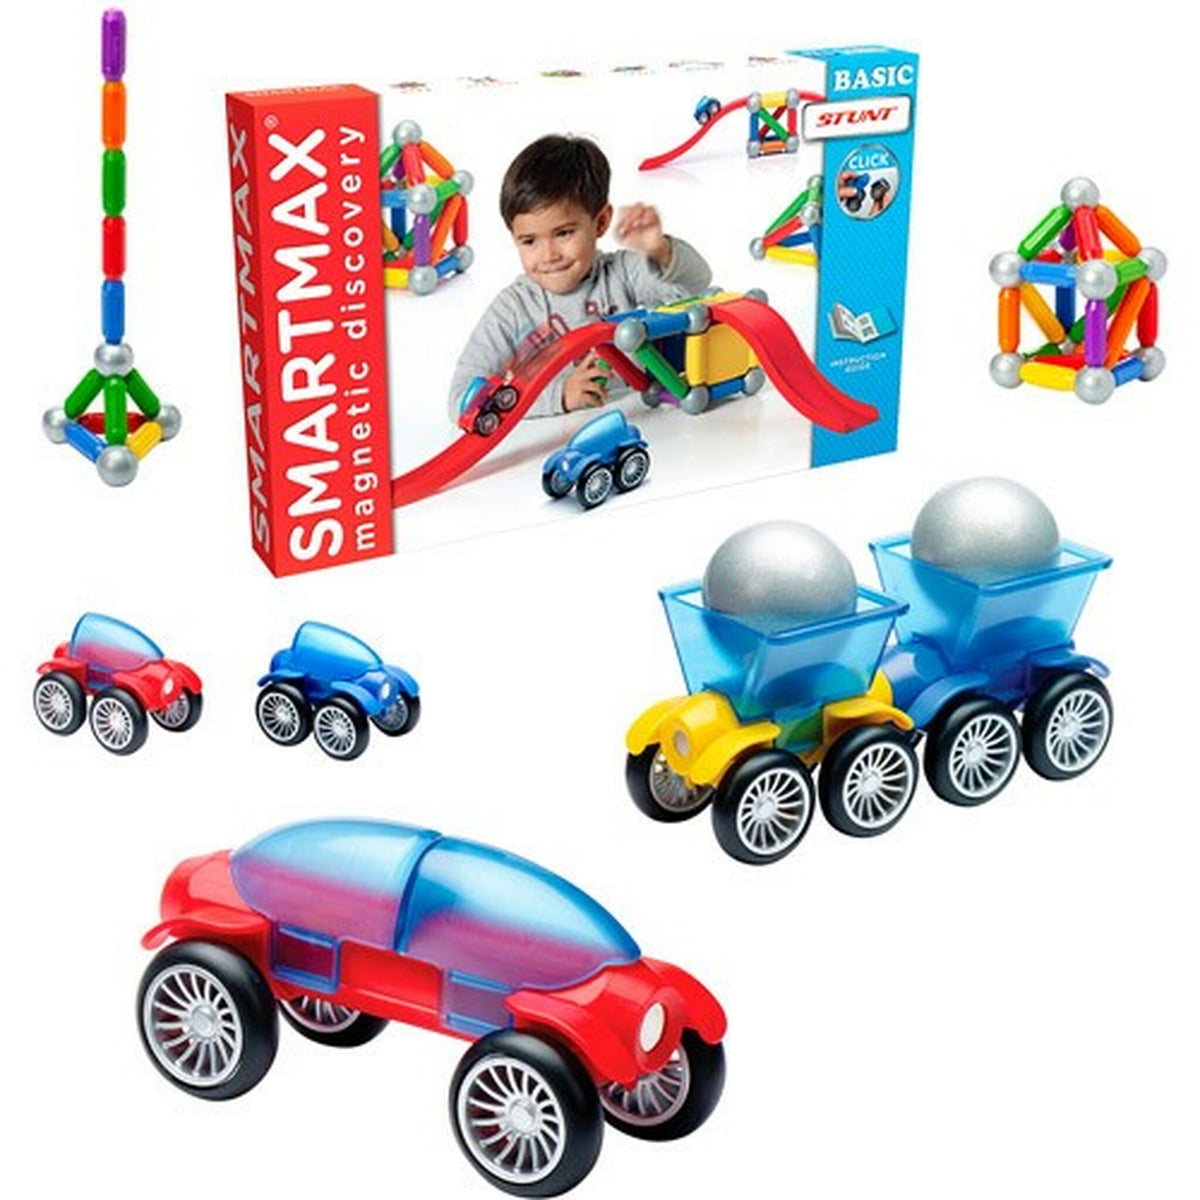 SmartMax: Basic Stunt Cars Cover